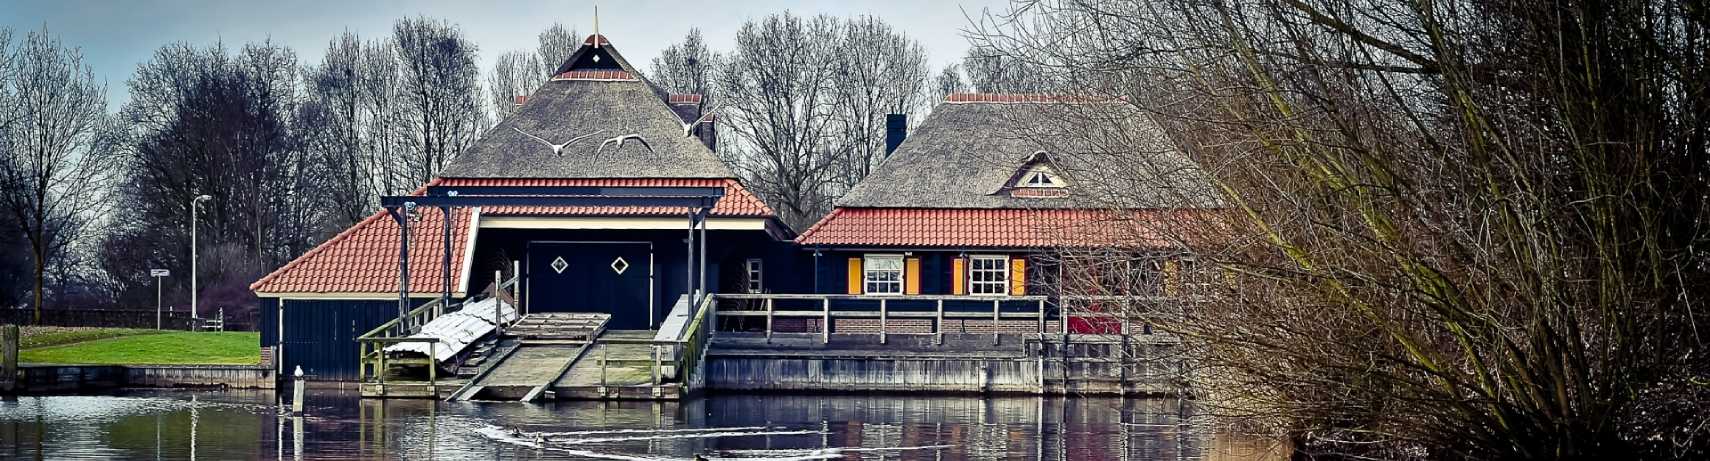 Landhuis met boothuis aan het water in Enter - Asbroek Adviesgroep